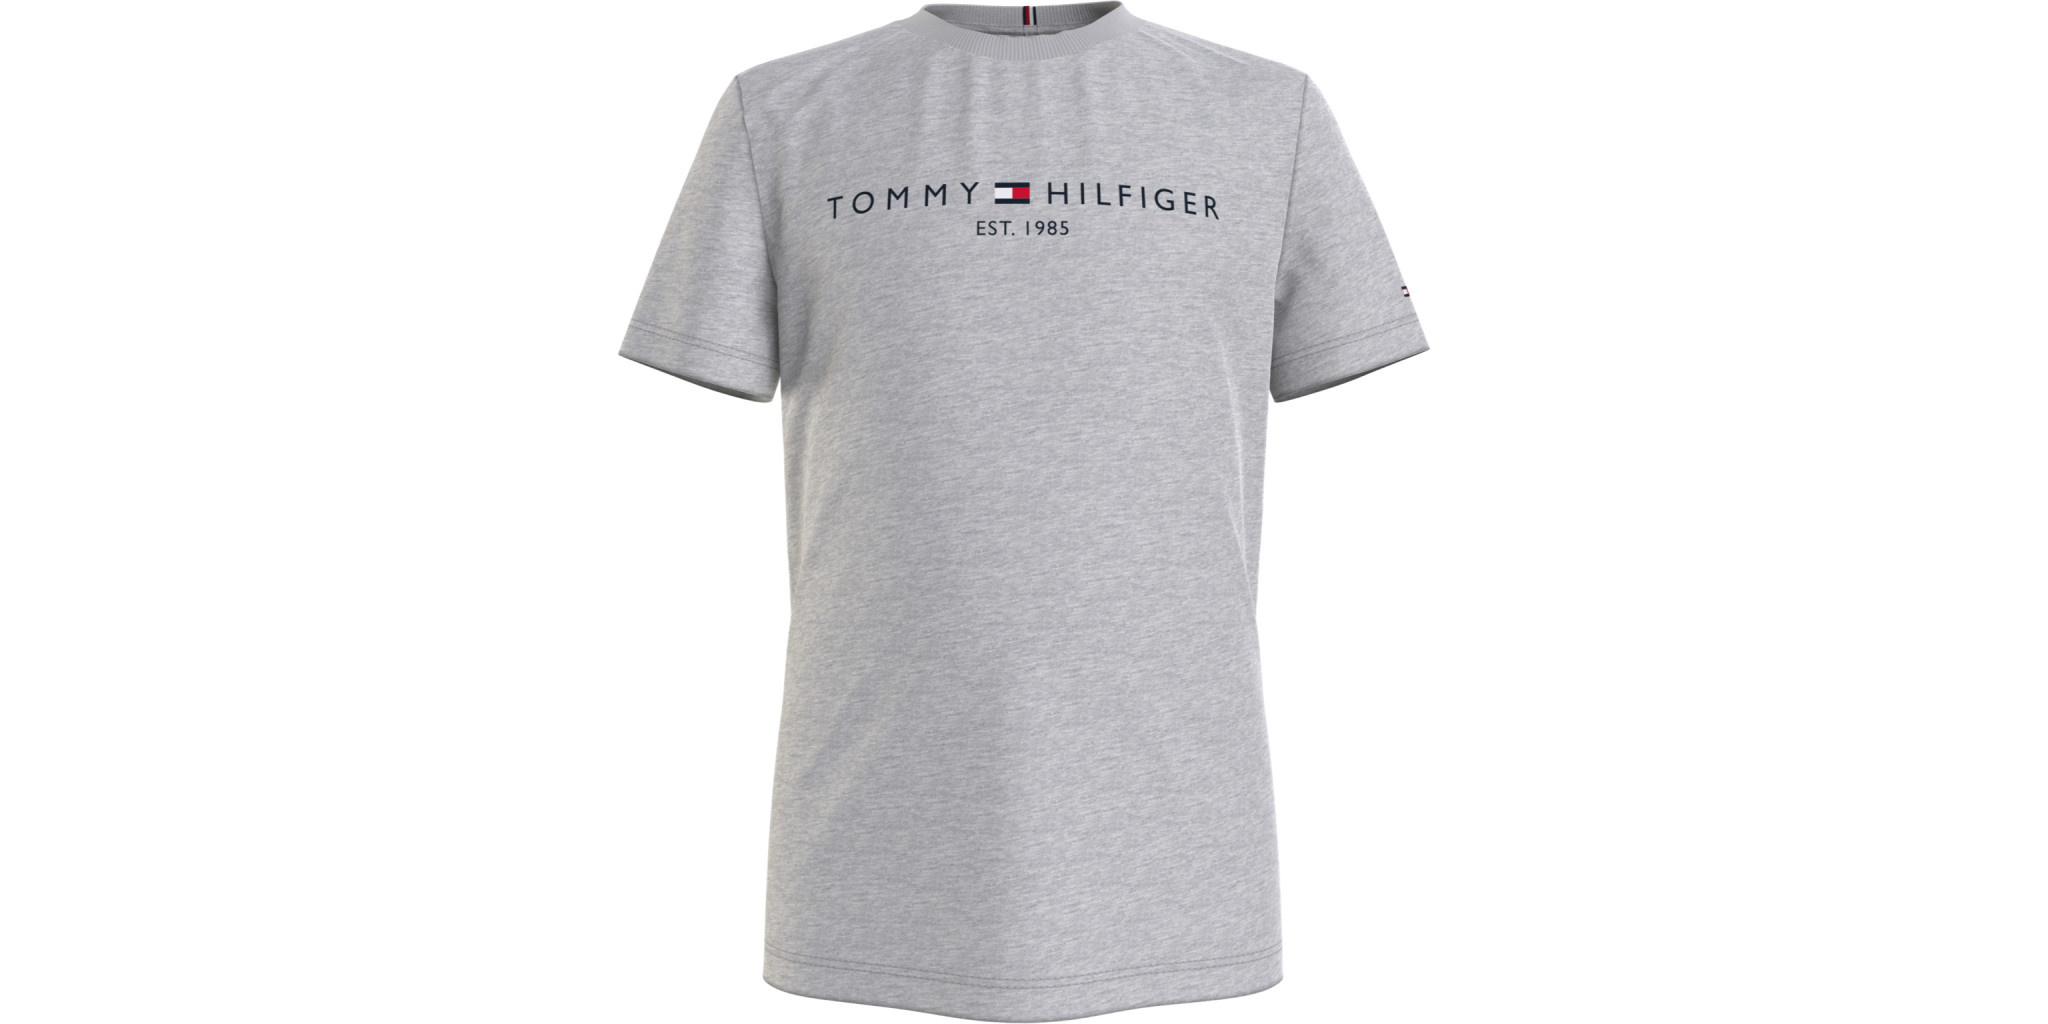 Tommy Hilfiger Tommy Hilfiger Shirt Light Grey Heather KB0KB05844 S21B